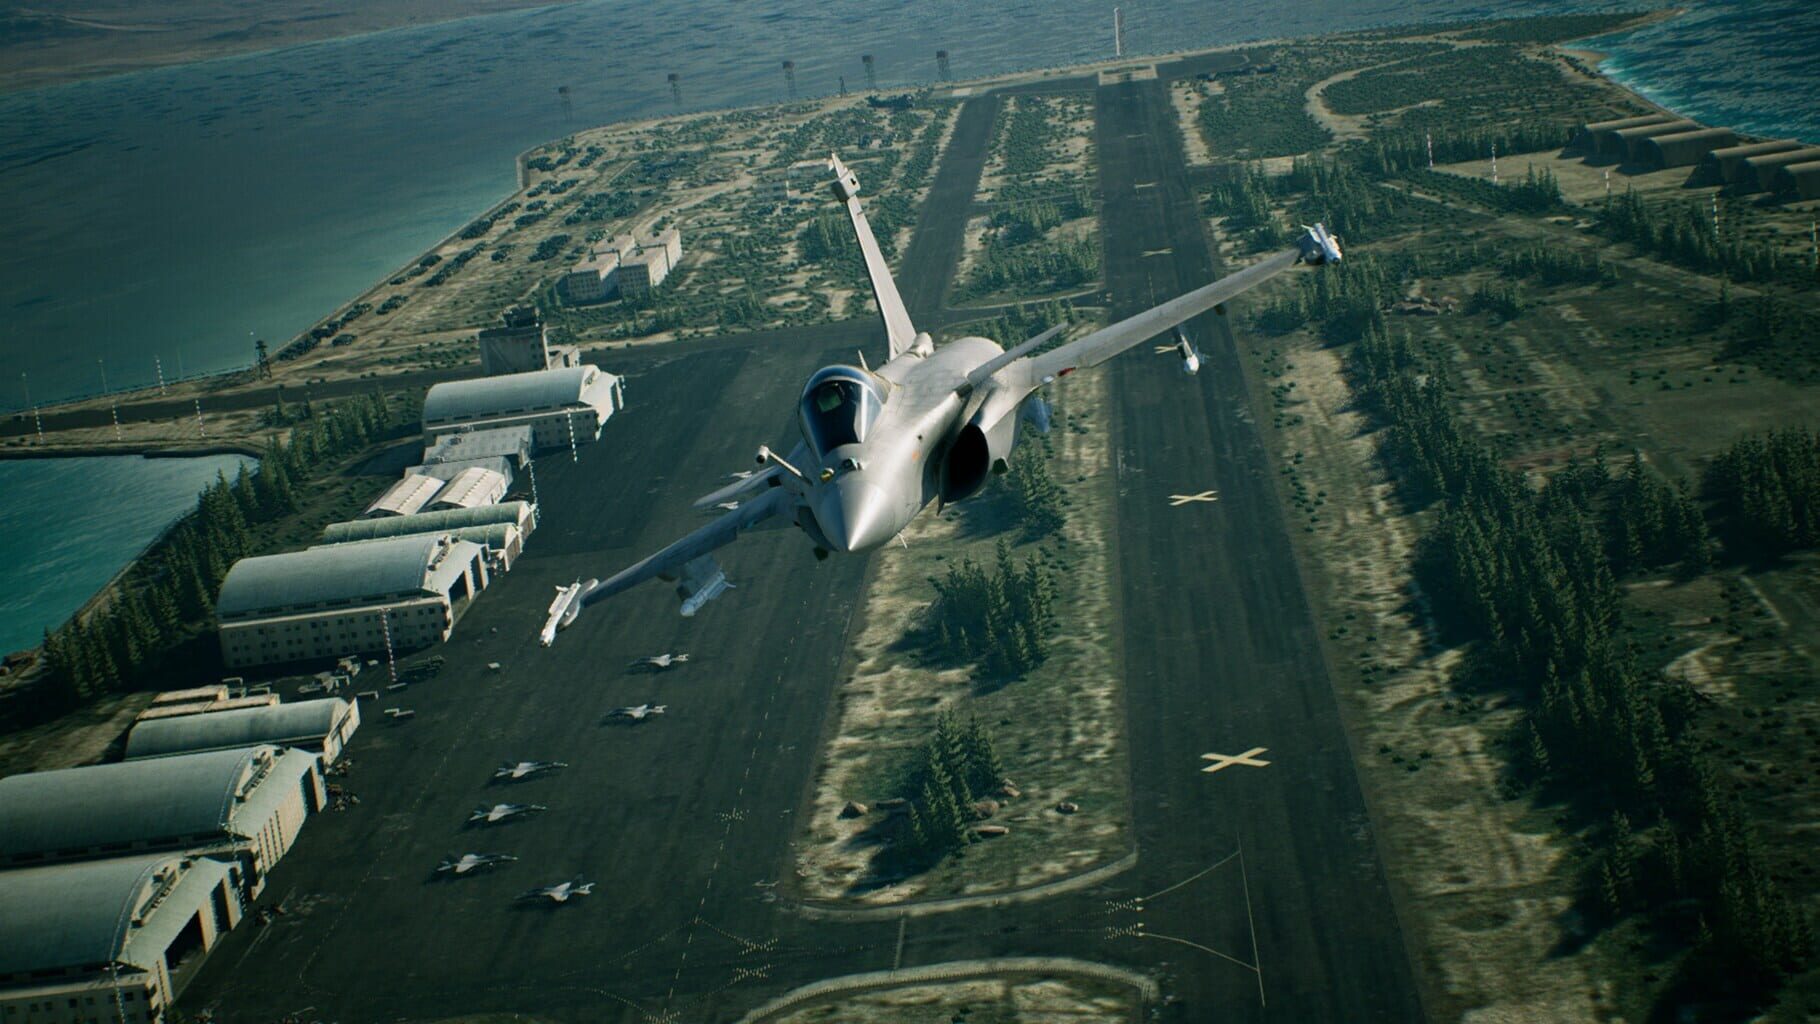 Ace Combat 7: Skies Unknown - Top Gun: Maverick Edition Image